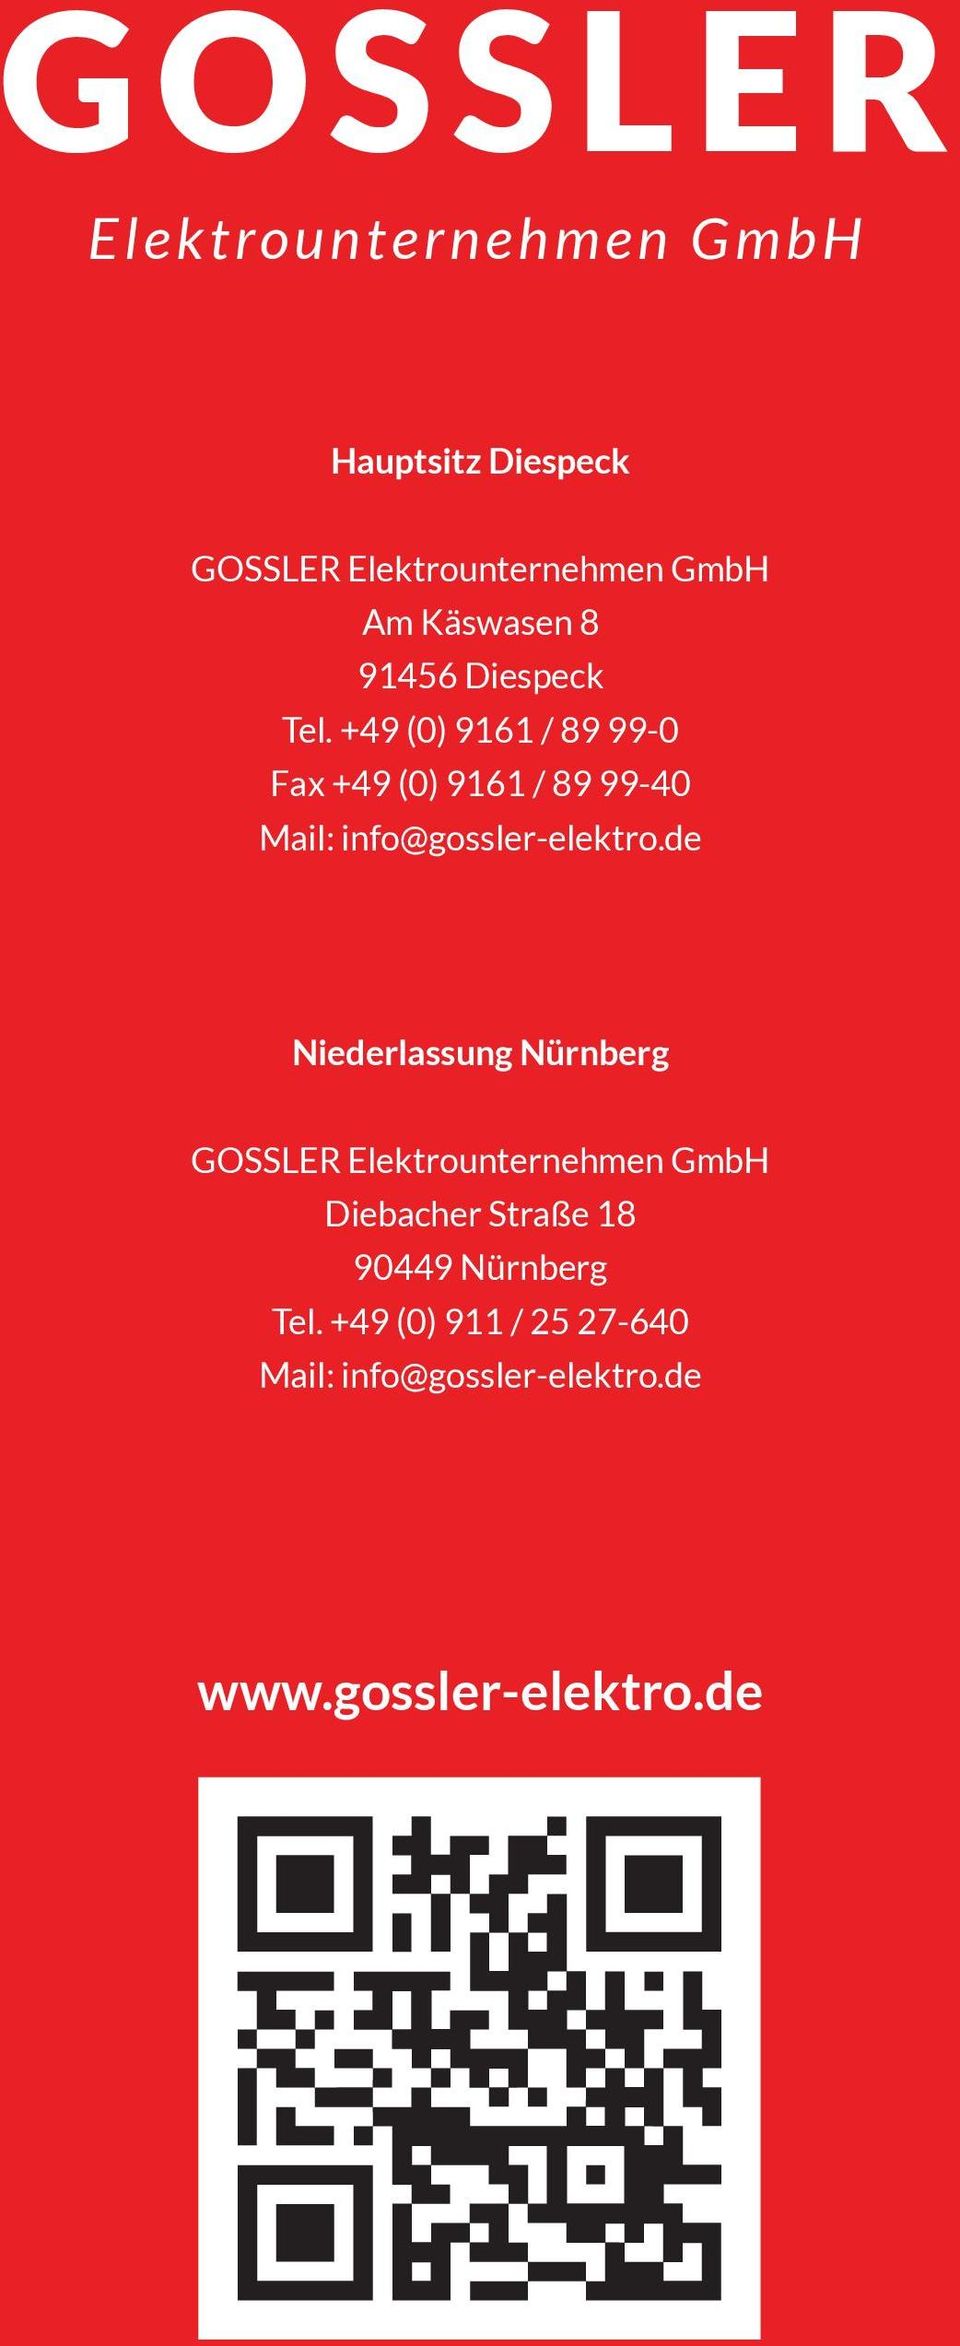 +49 (0) 9161 / 89 99-0 Fax +49 (0) 9161 / 89 99-40 Mail: info@gossler-elektro.